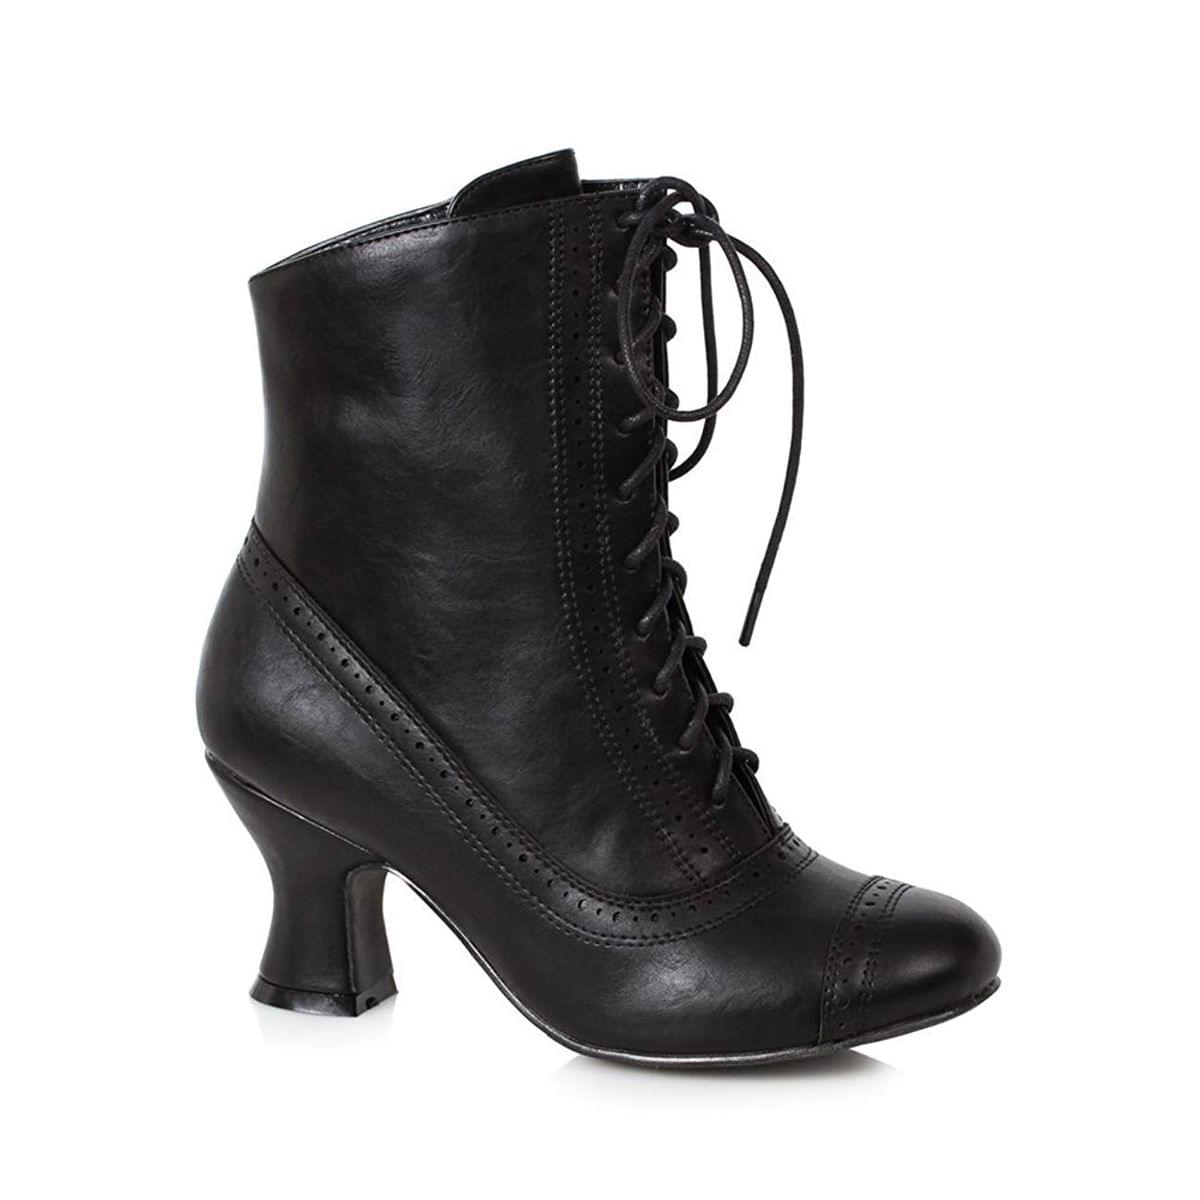 Victorian 2.5 Heel Women's Mid Calf Lace Up Costume Boot (Black)